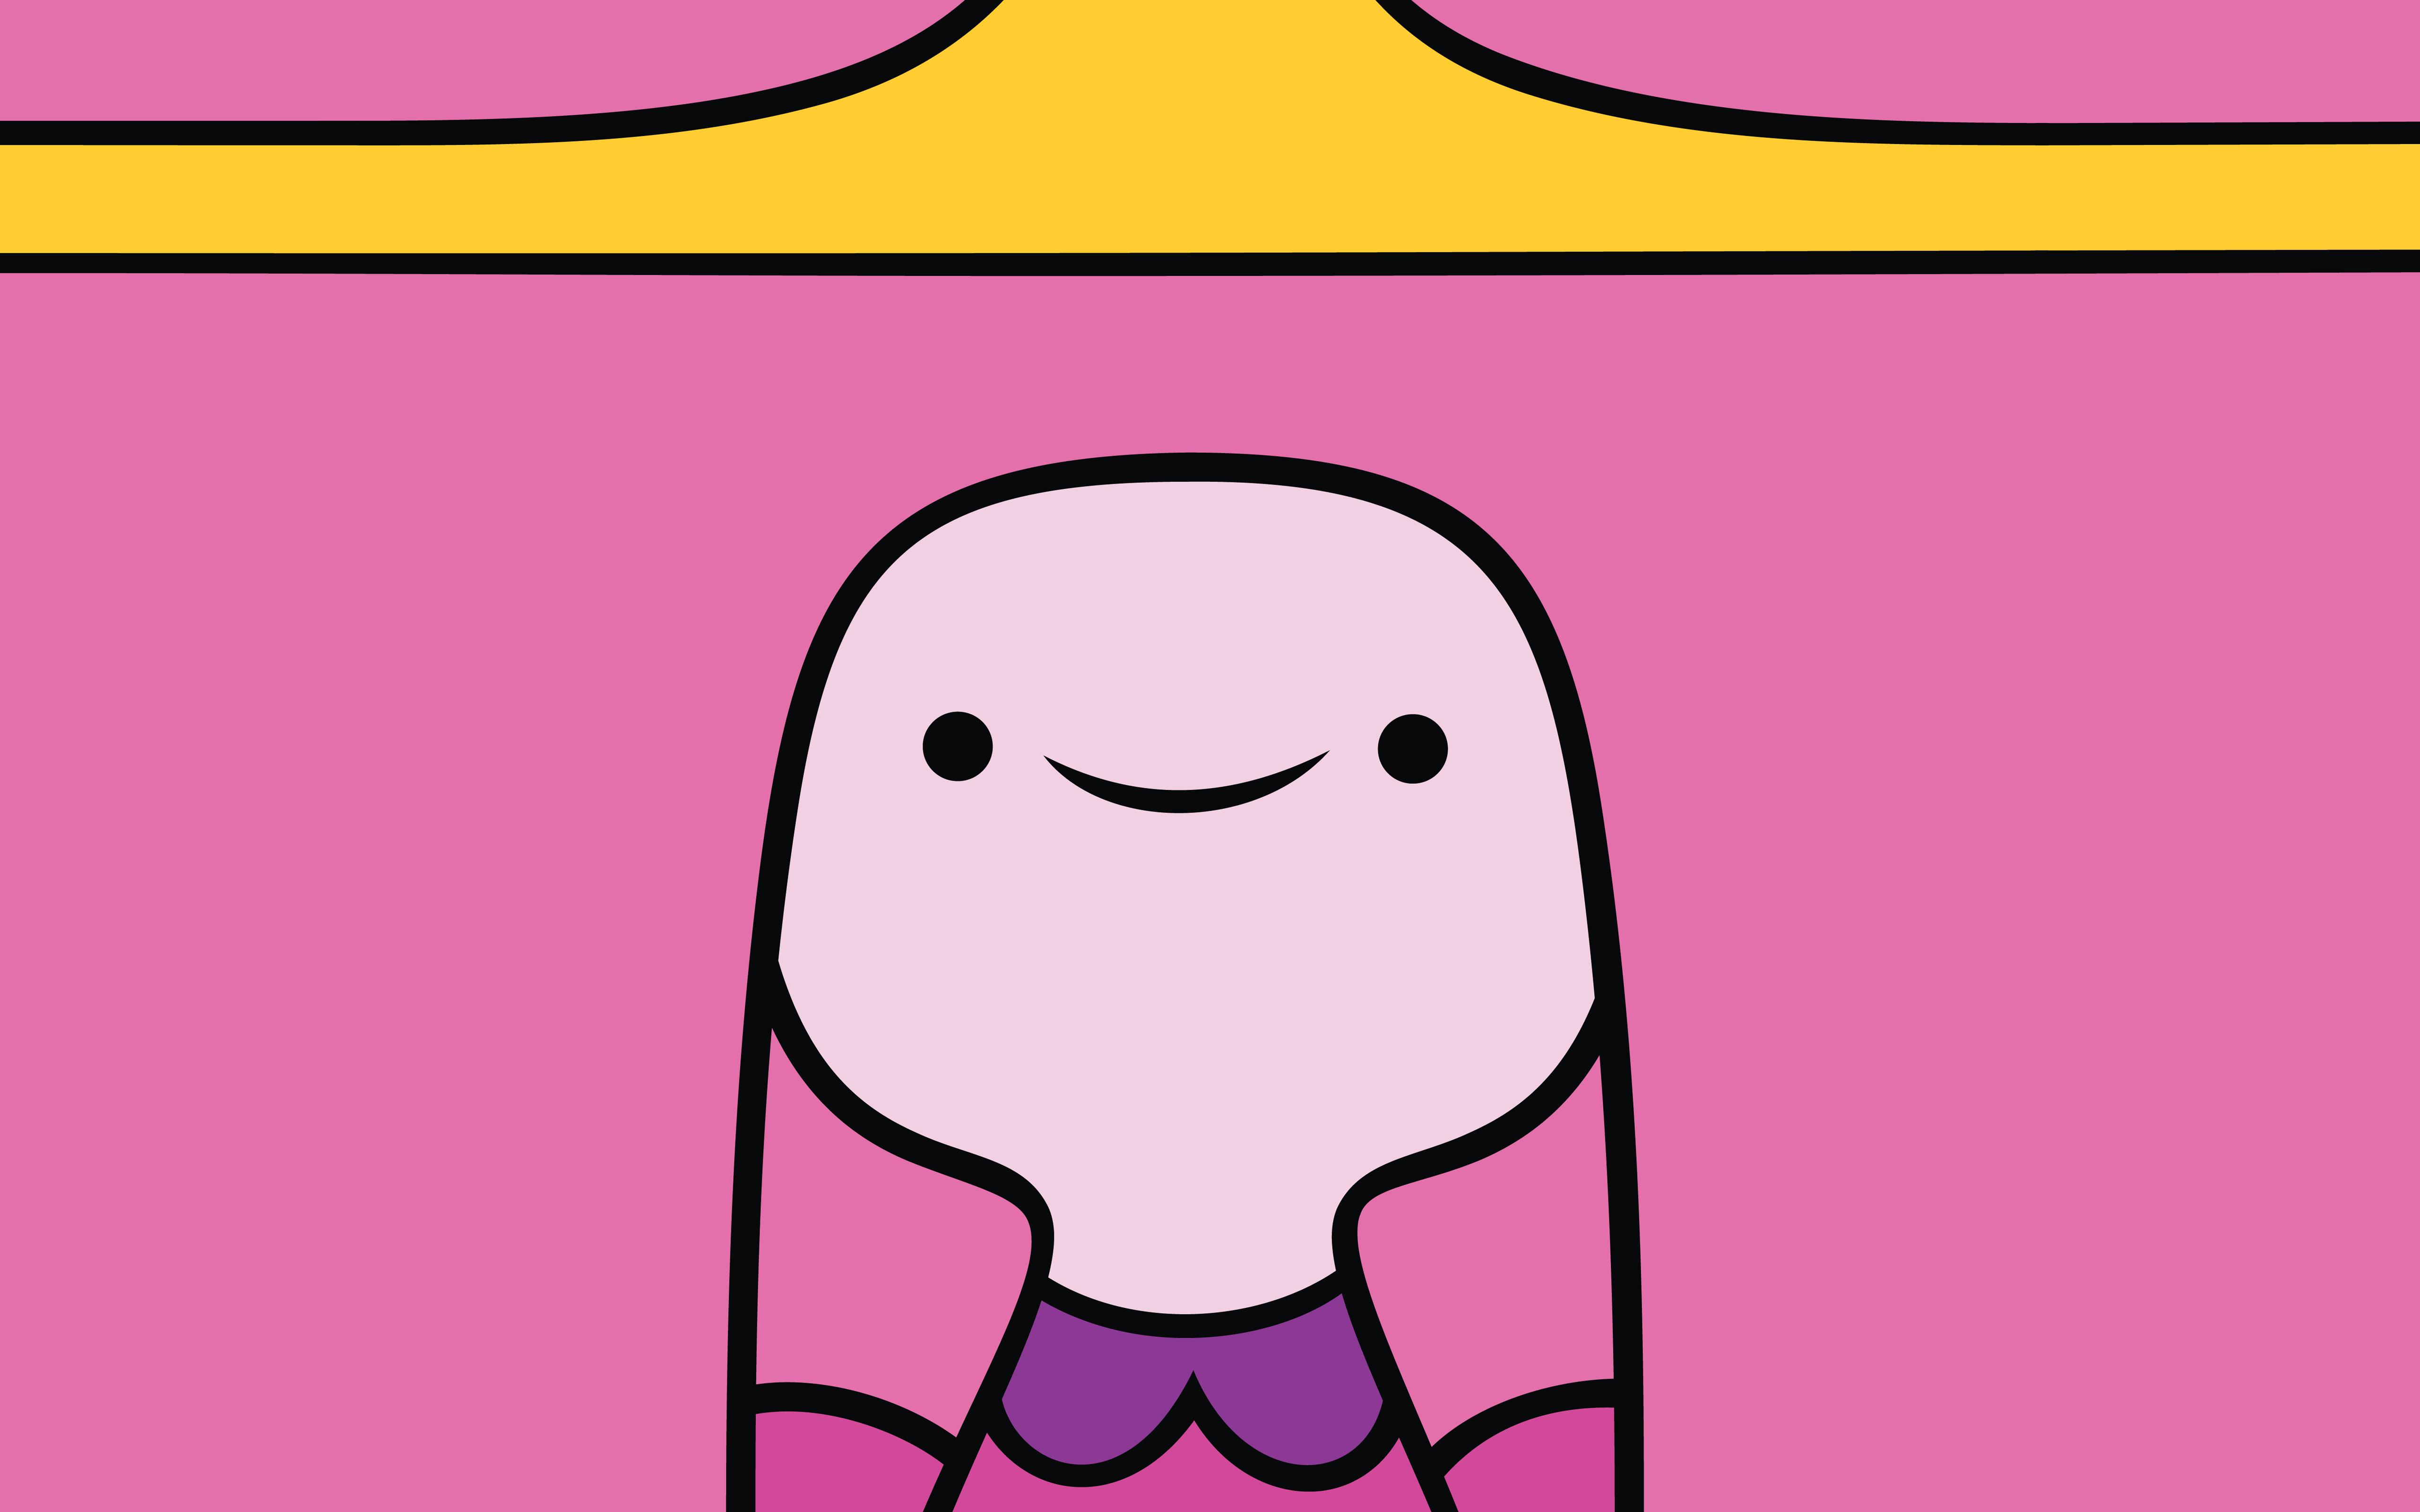 More Princess Bubblegum de Adventure Time wallpaper. Personajes